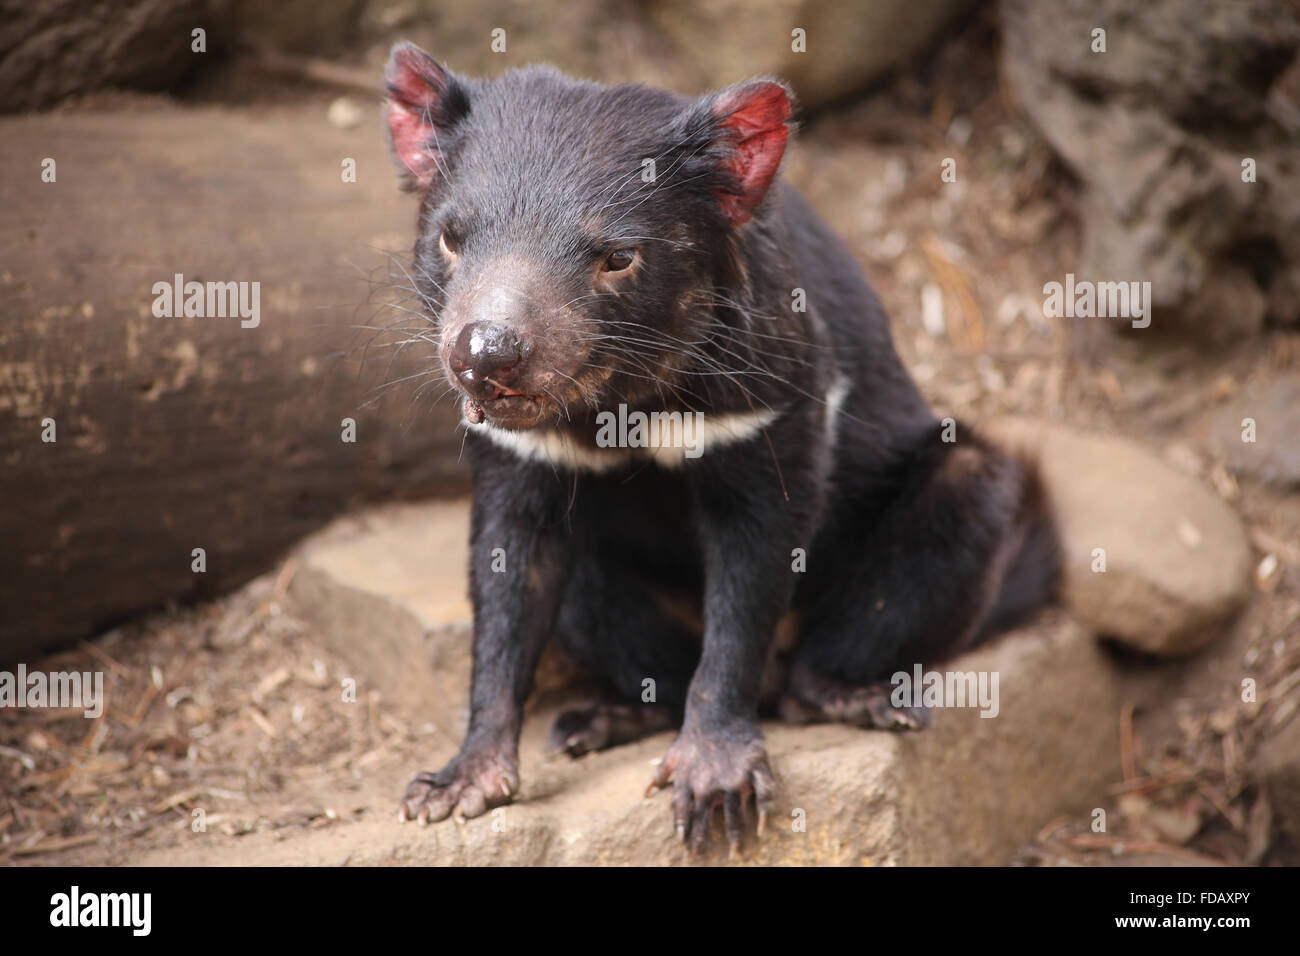 A young Tasmanian devil at a sanctuary in Tasmania, Australia Stock Photo